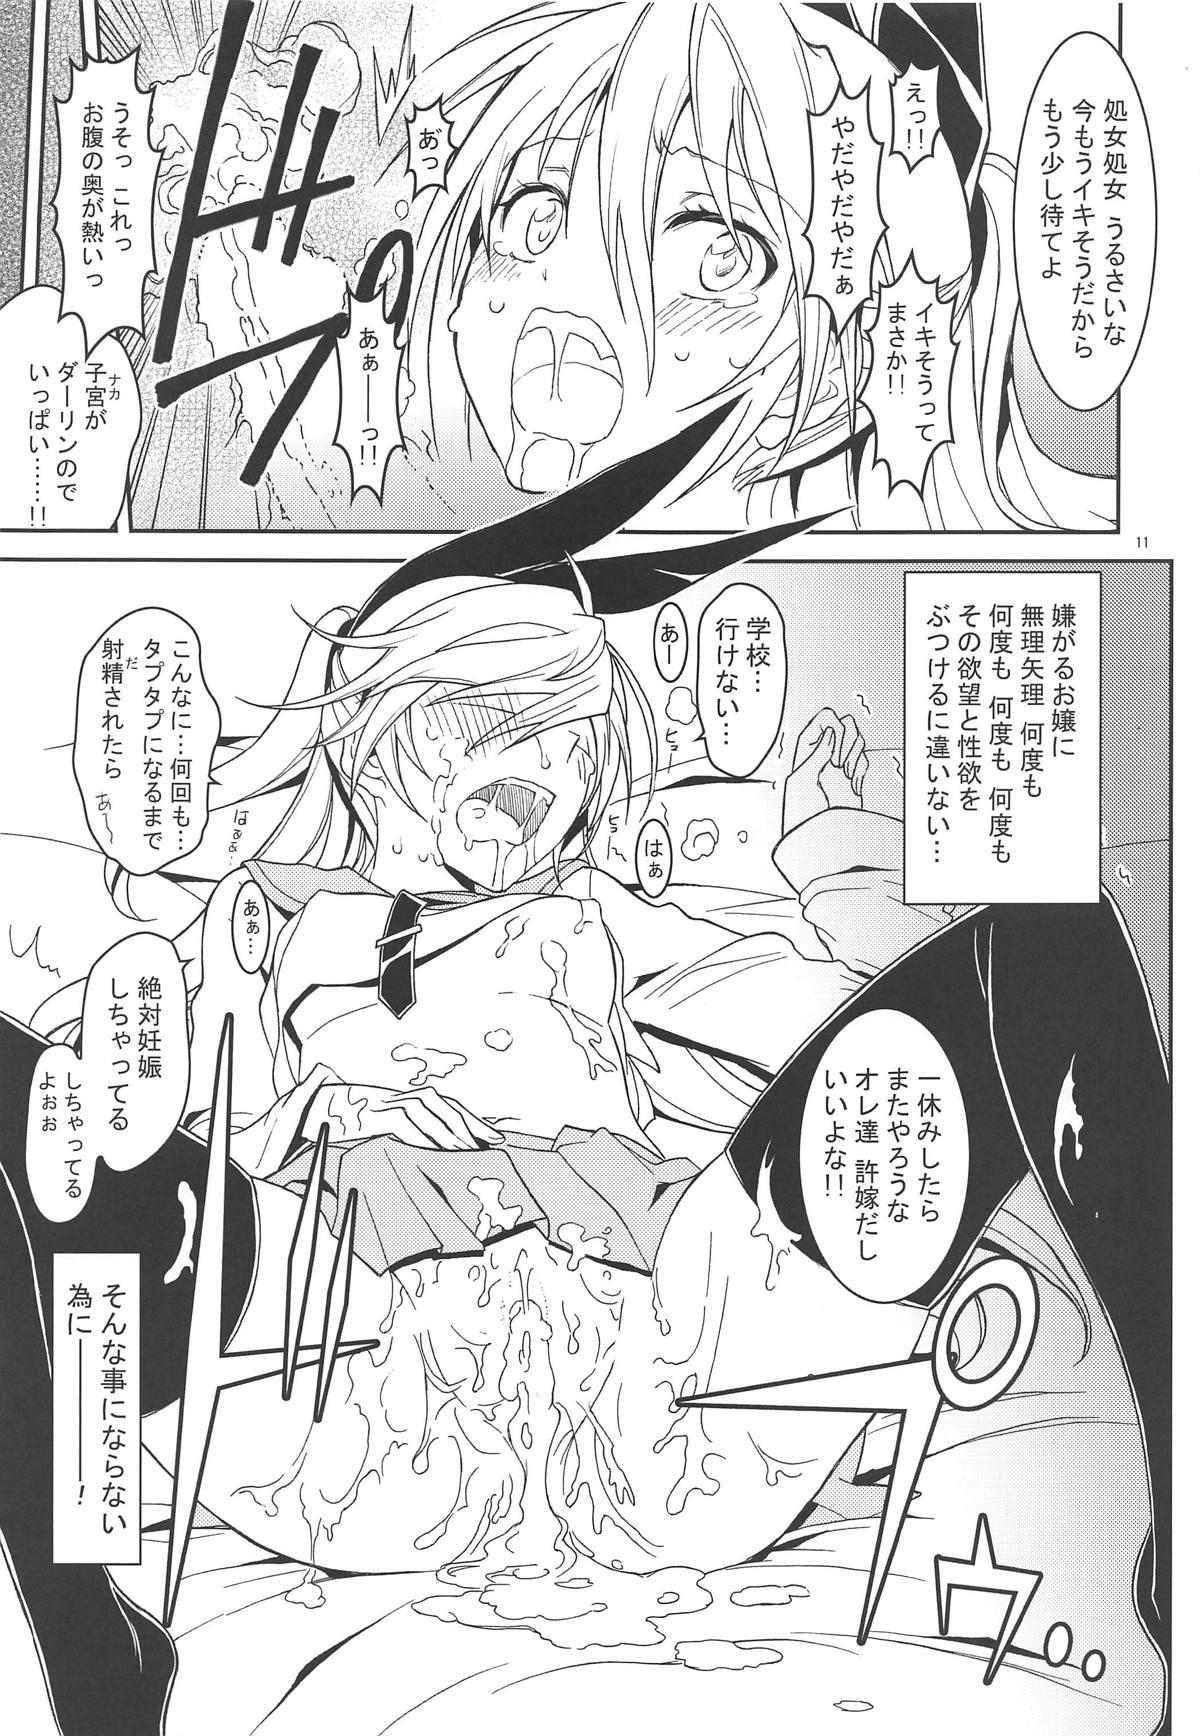 Weird Nisenisekoi Tsugumi End - Nisekoi Brother Sister - Page 10